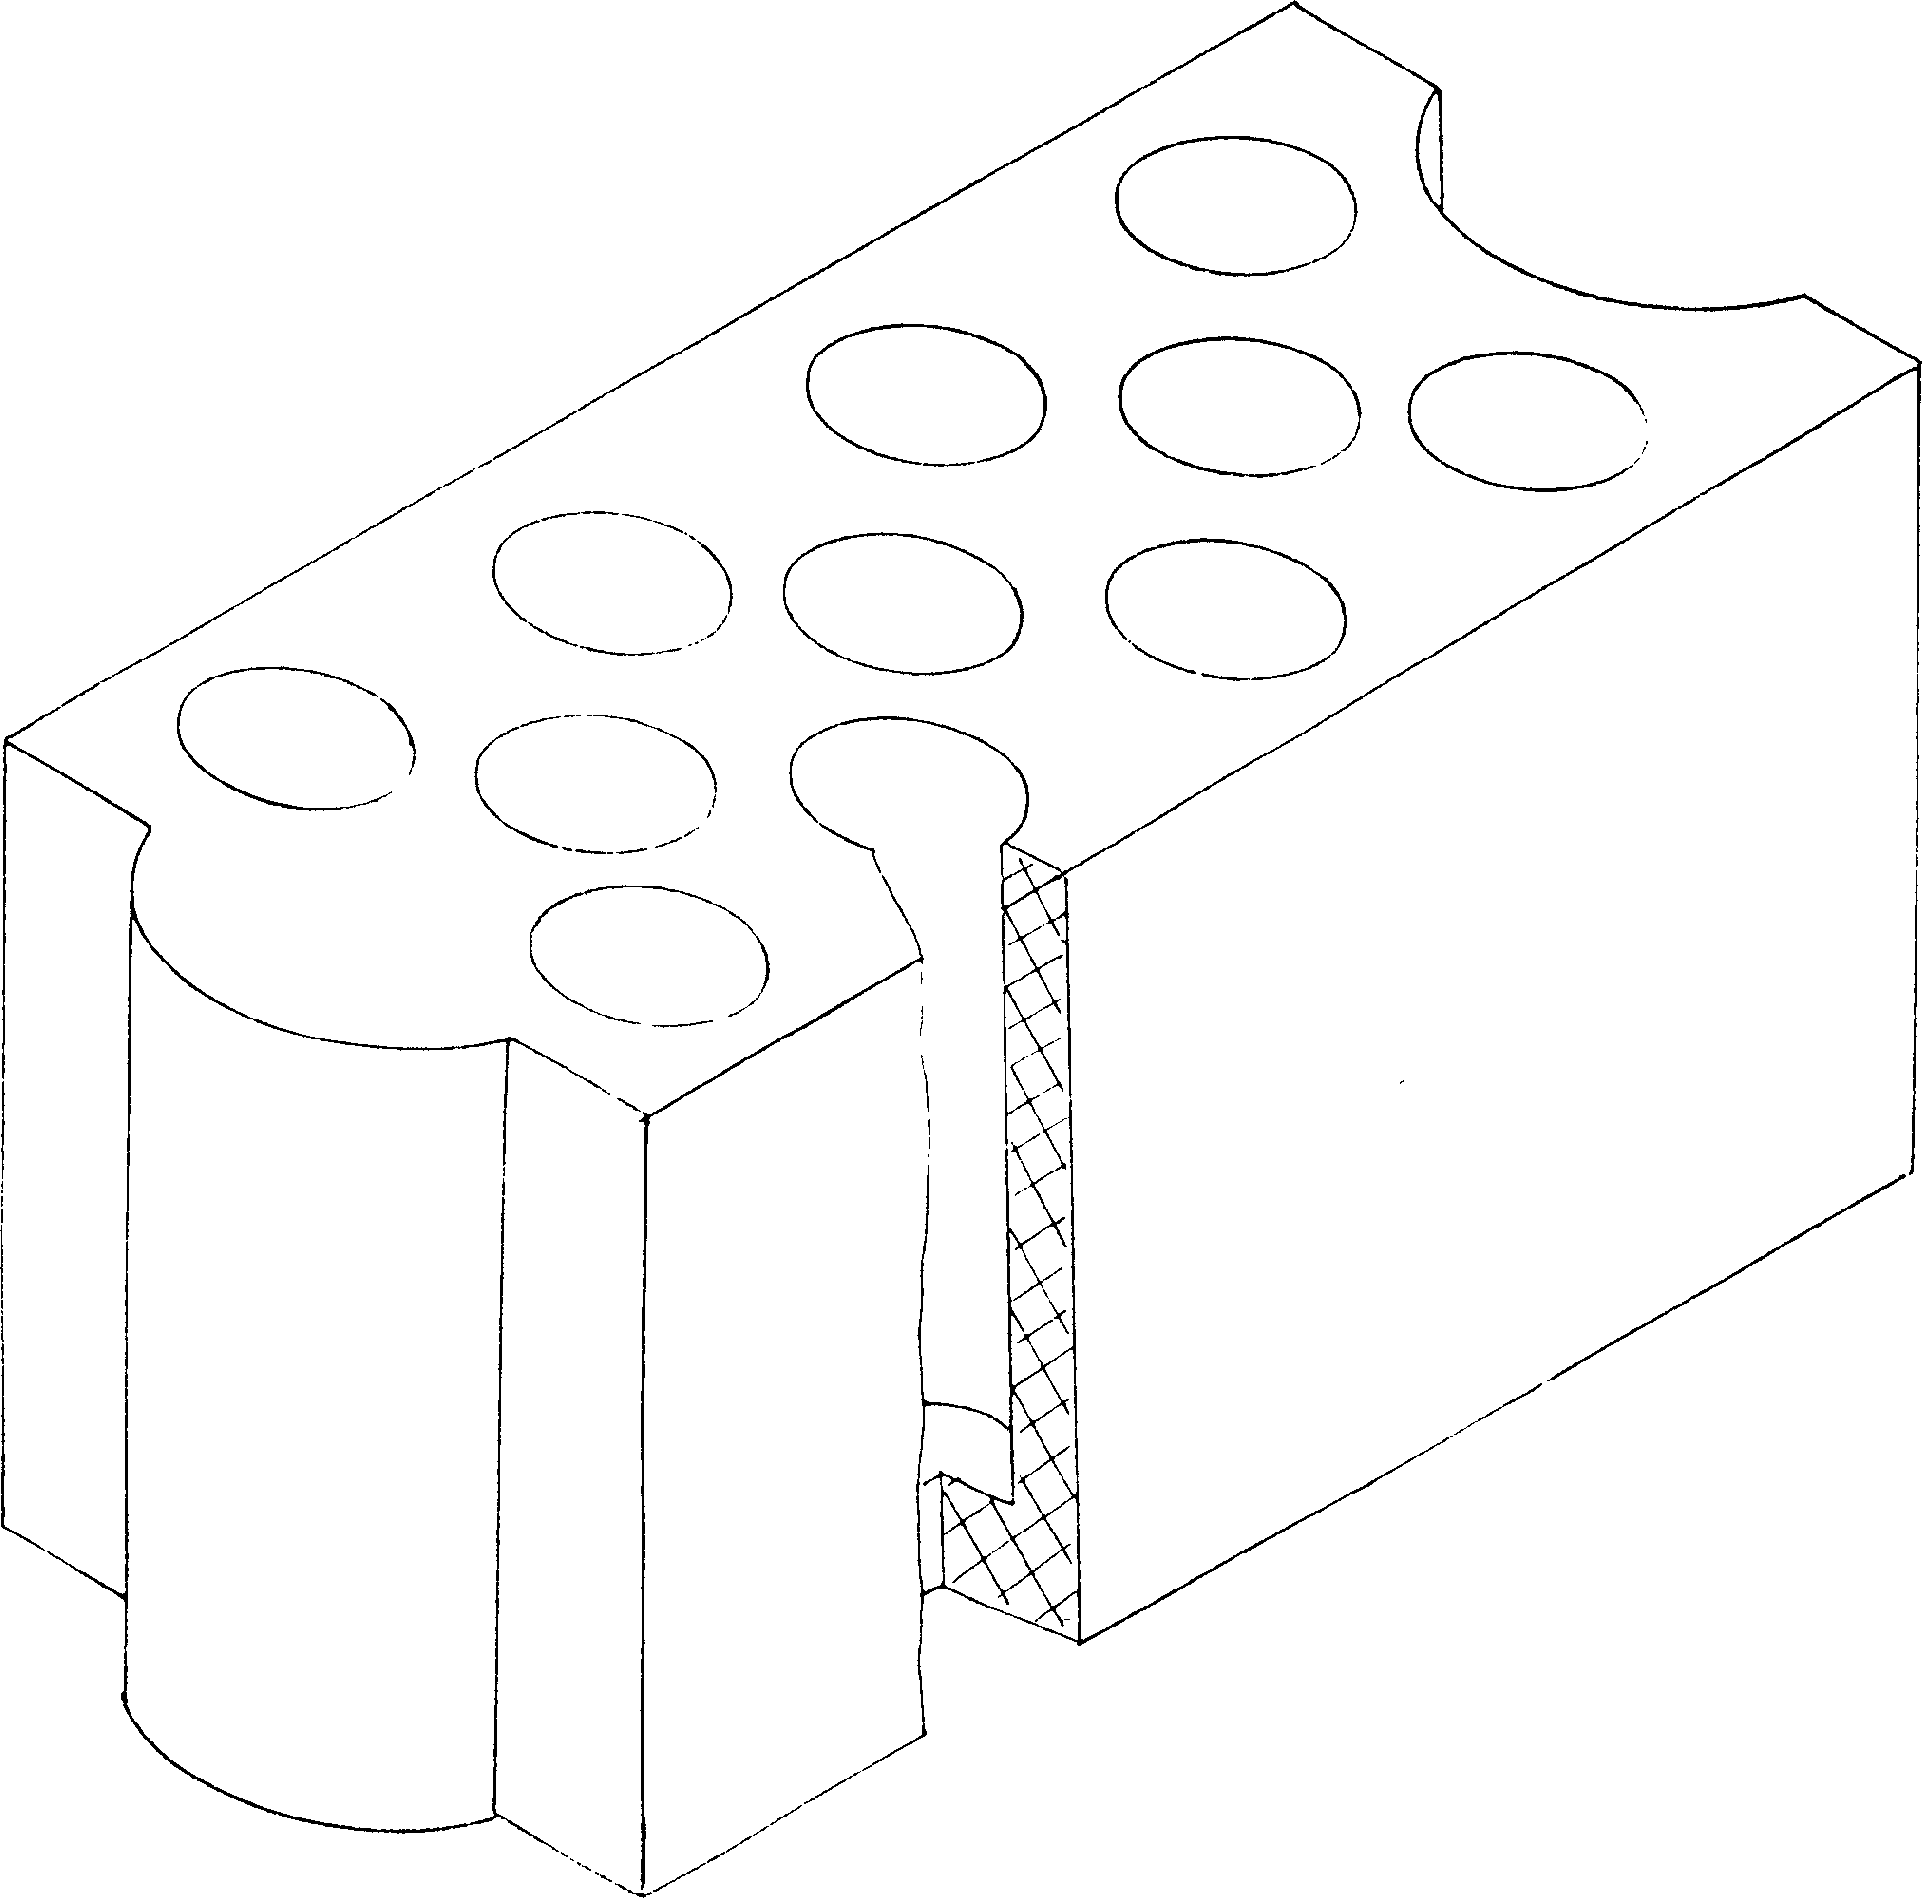 Manufacturing method of light-weight building block for internal, external wall